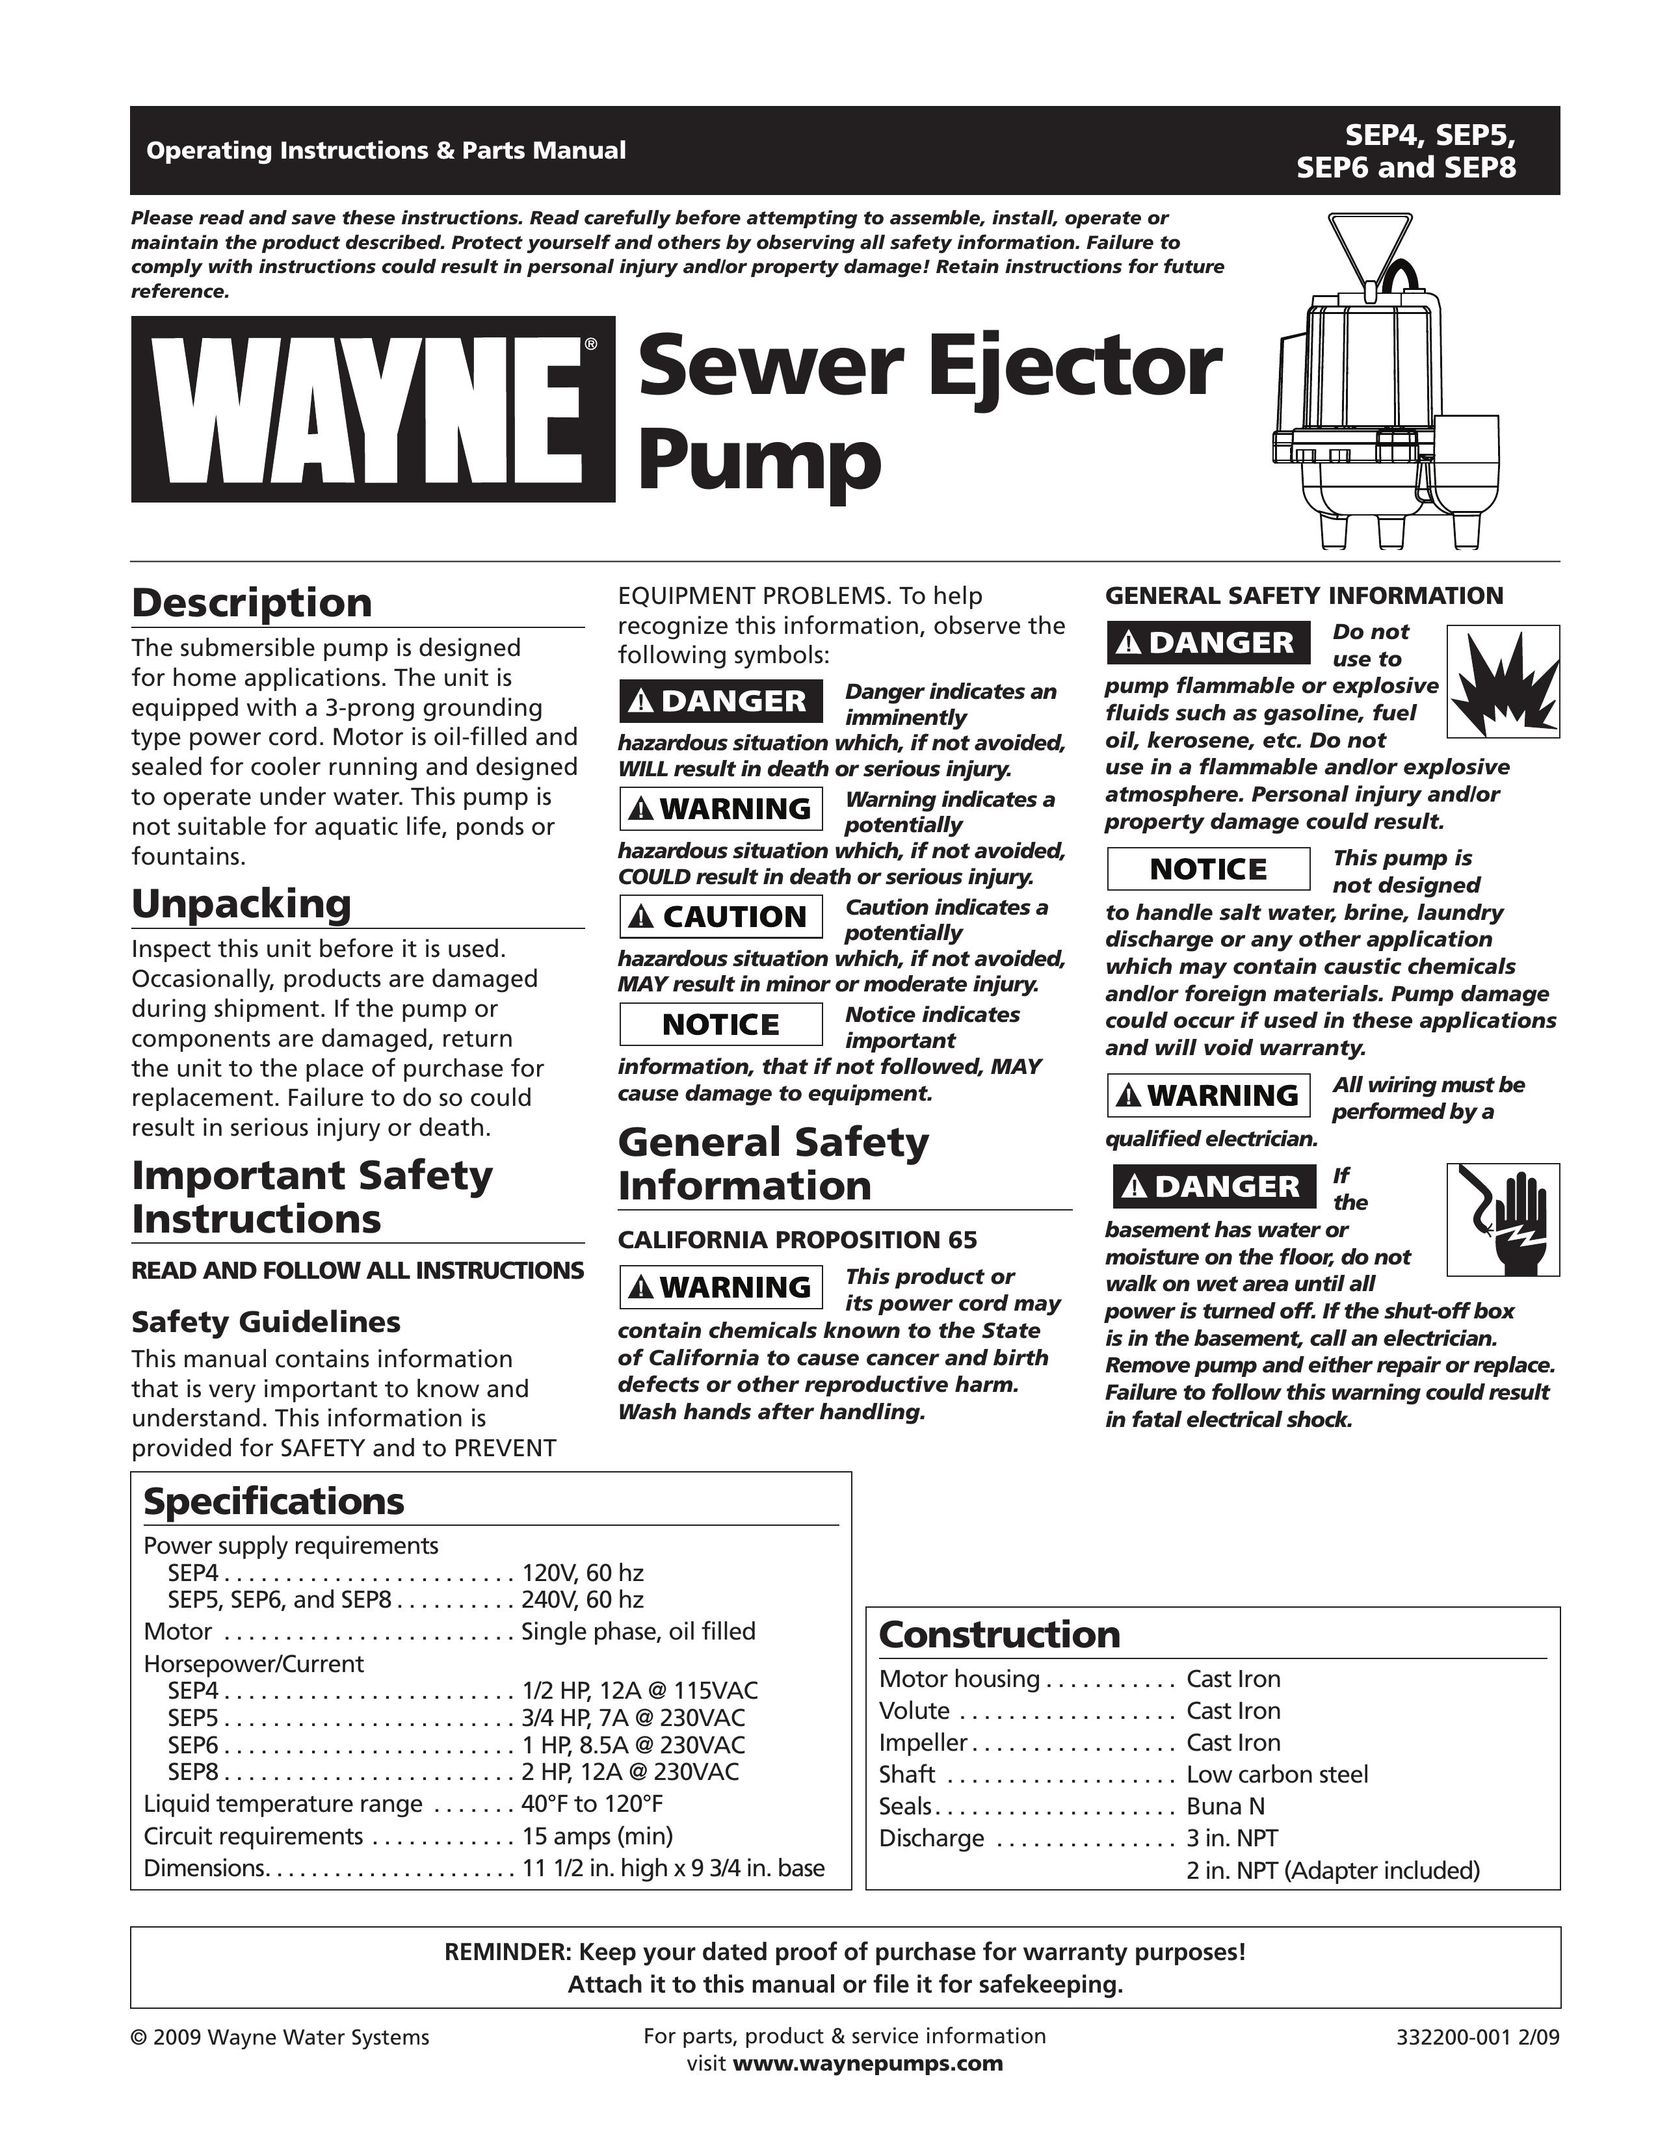 Wayne 332200-001 Septic System User Manual